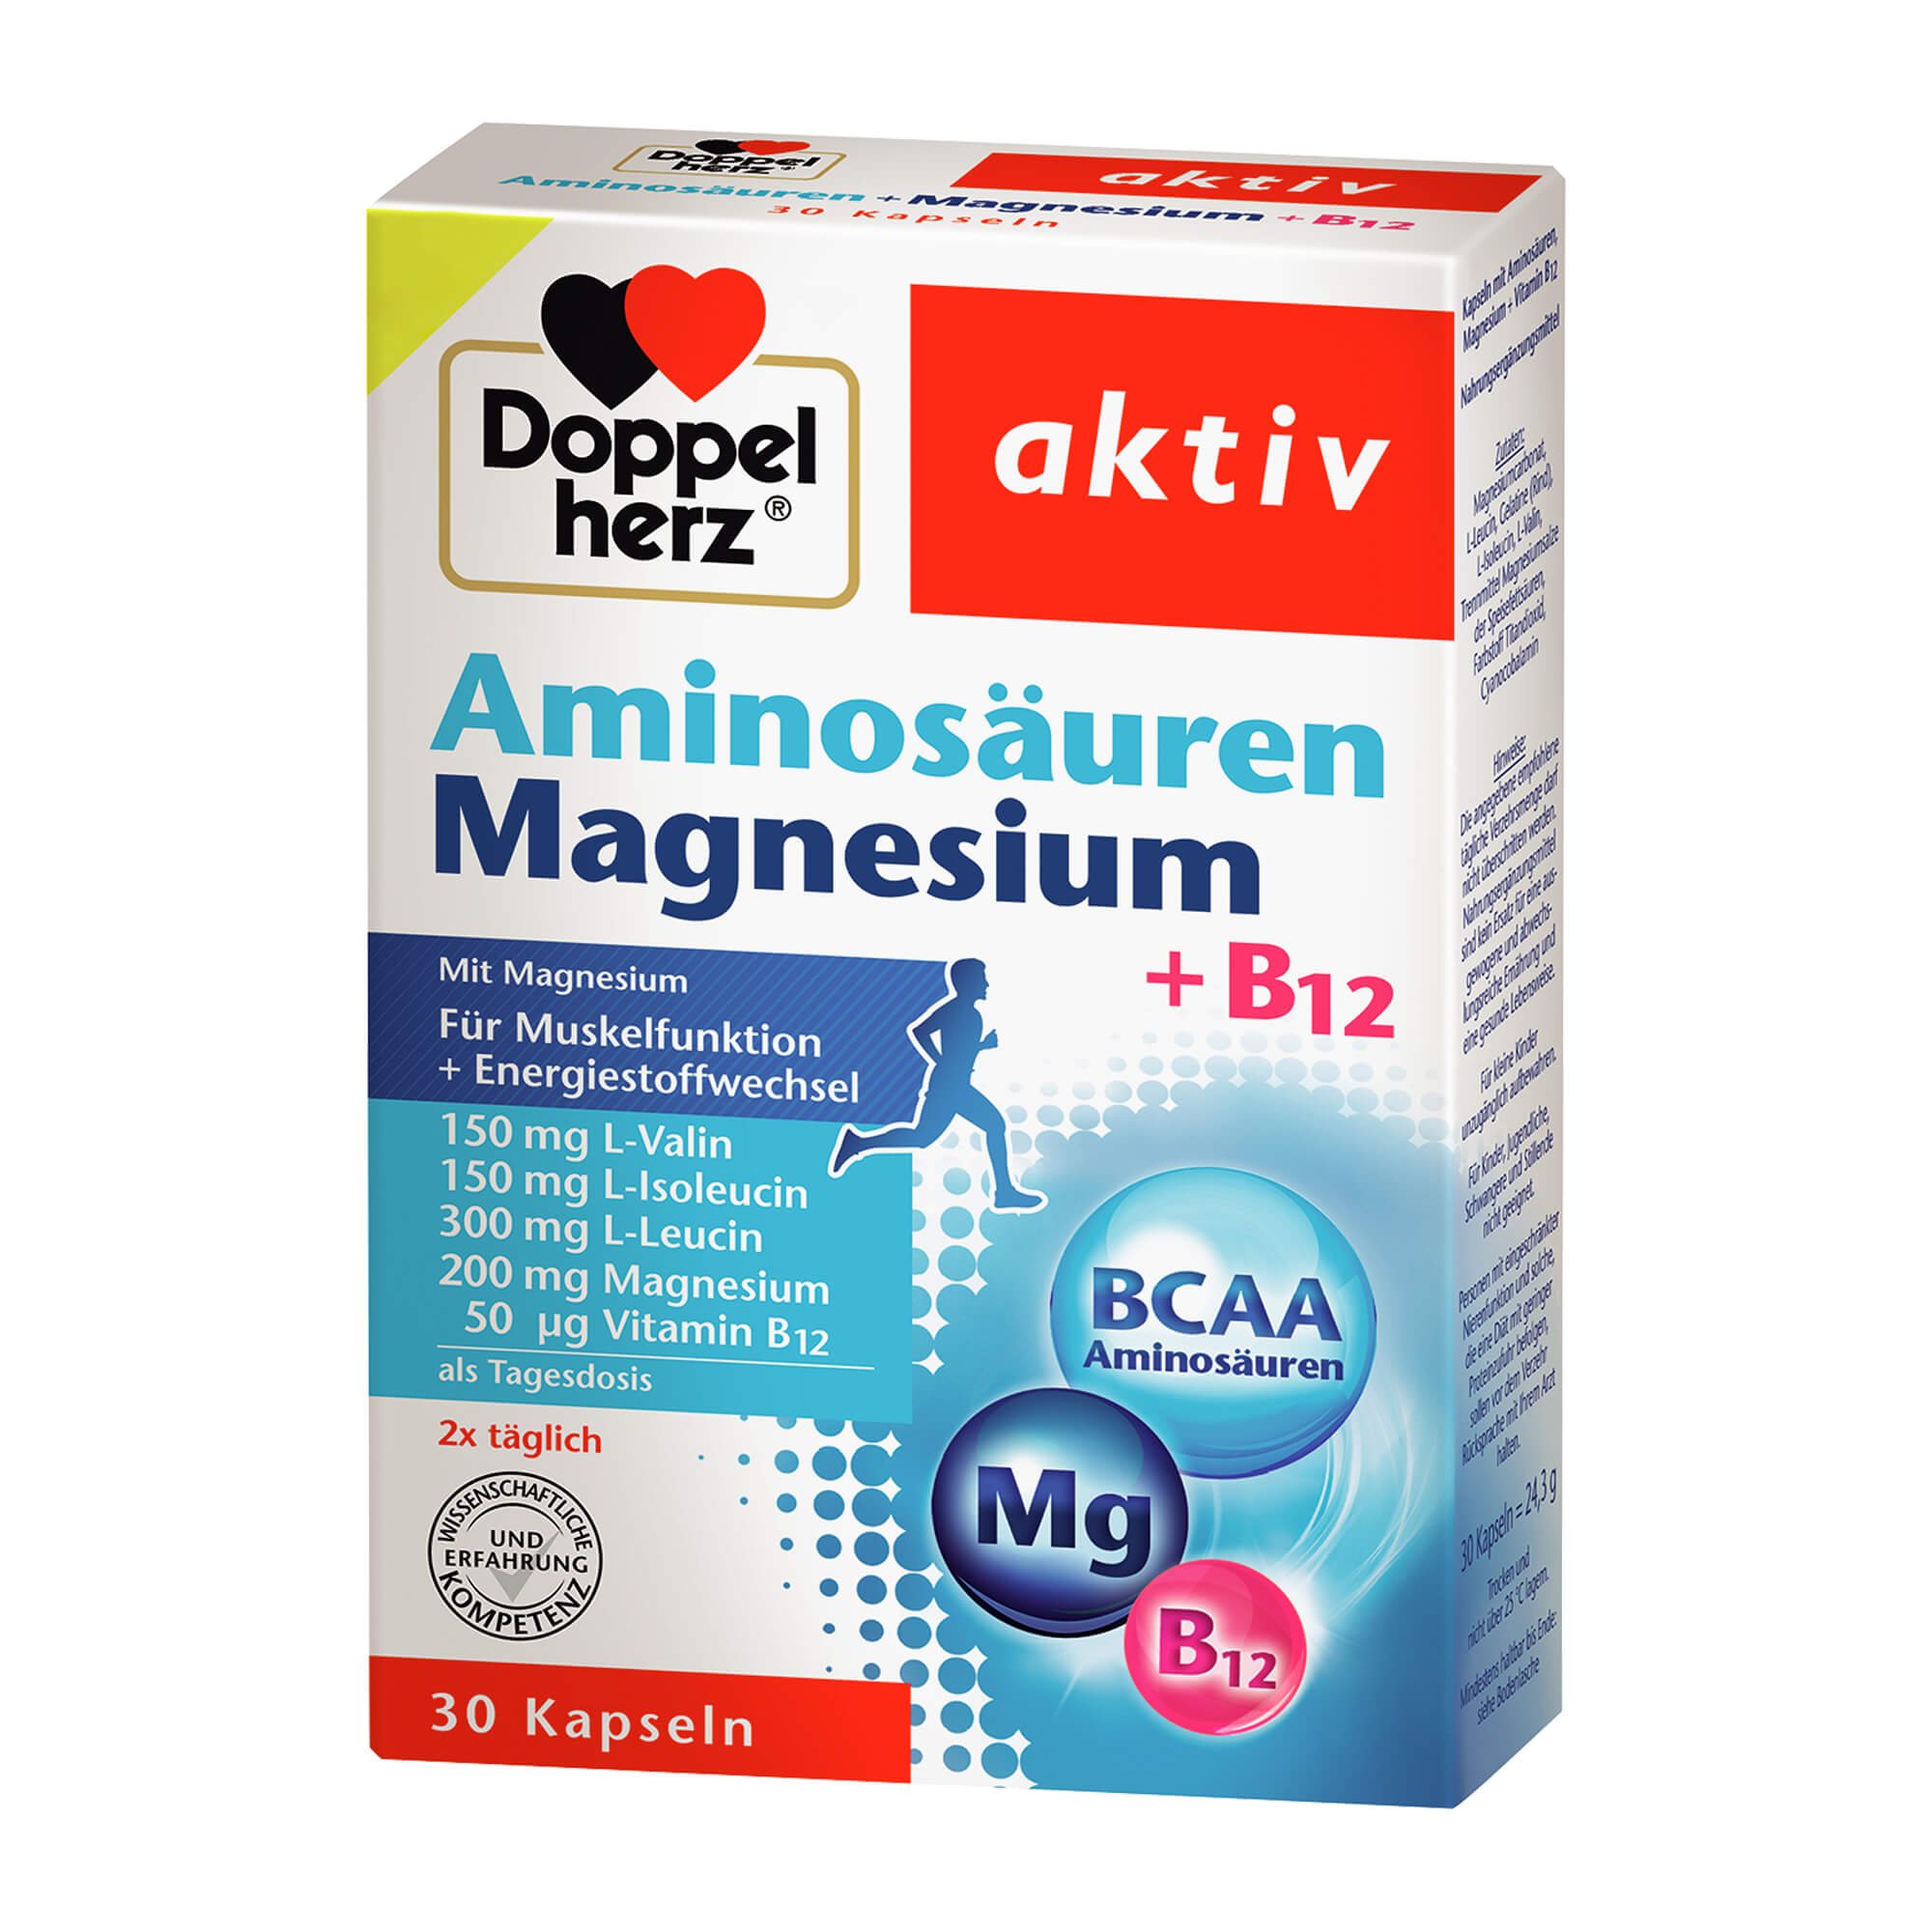 Nahrungsergänzungsmittel mit Aminosäuren, Magnesium + Vitamin B12.